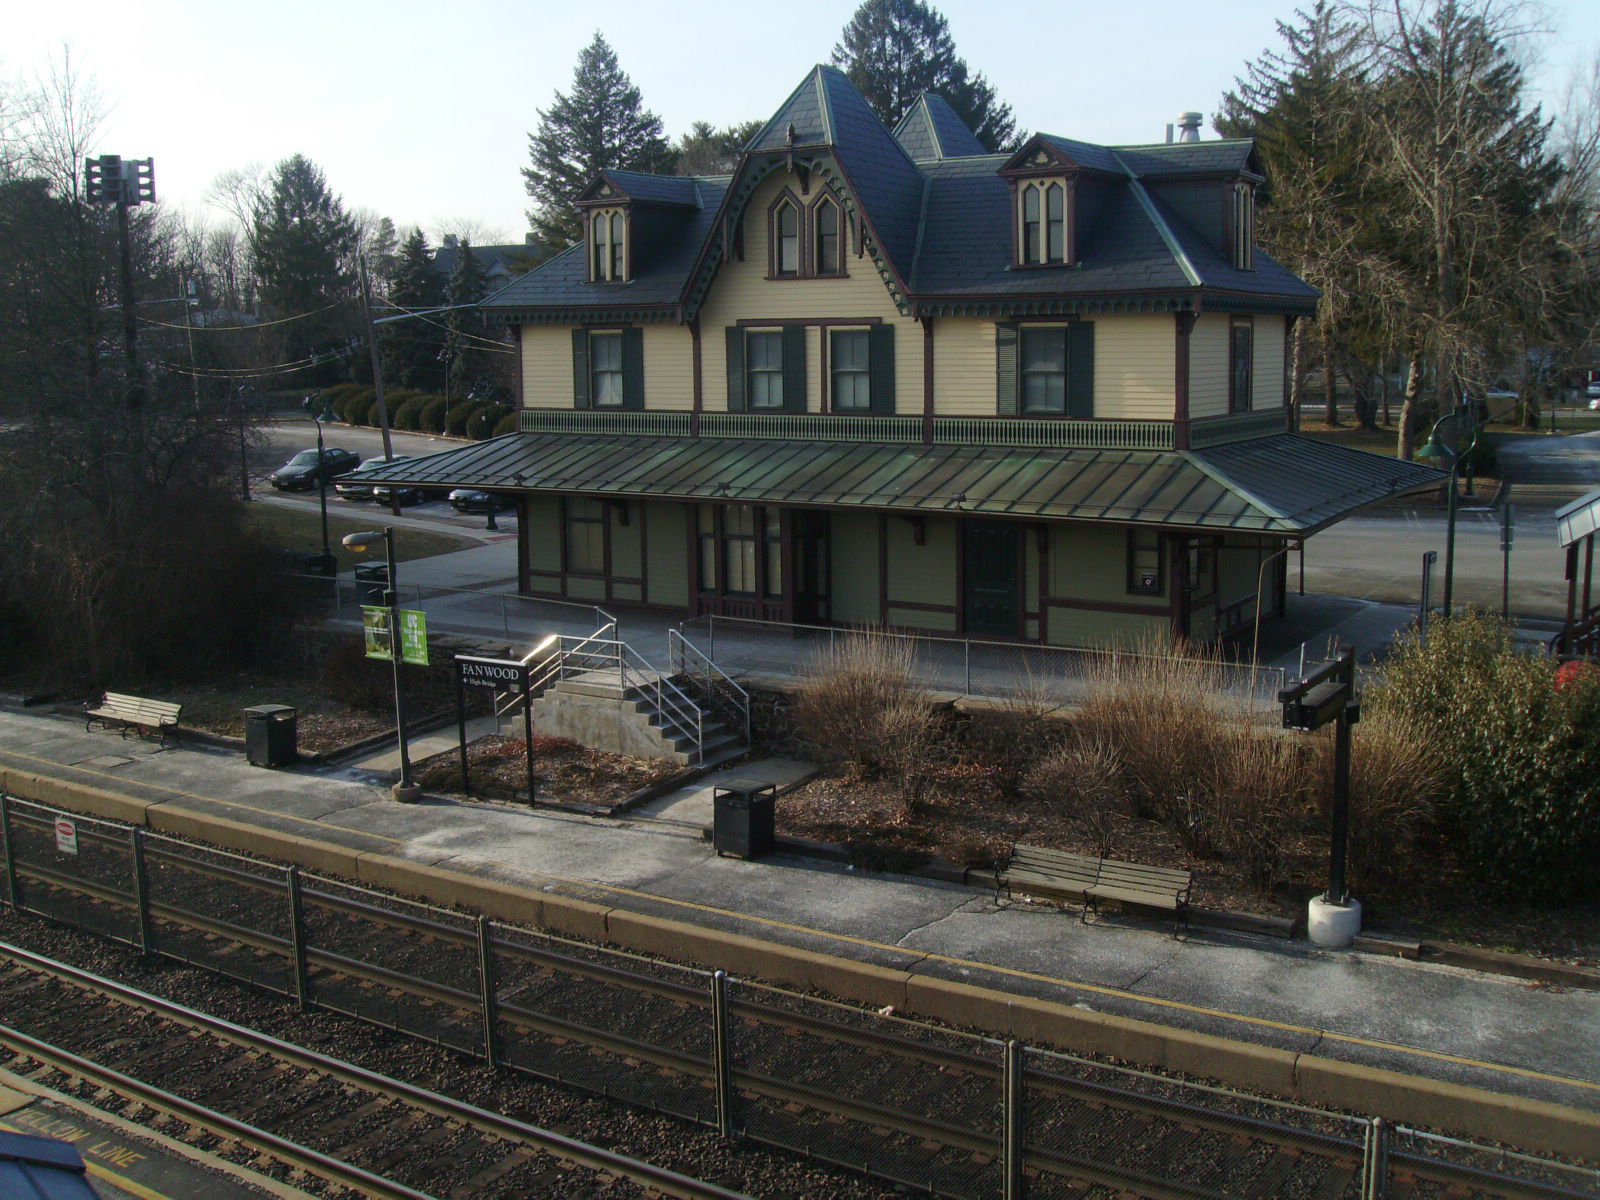 https://upload.wikimedia.org/wikipedia/commons/9/93/Fanwood_Station_from_overpass.jpg